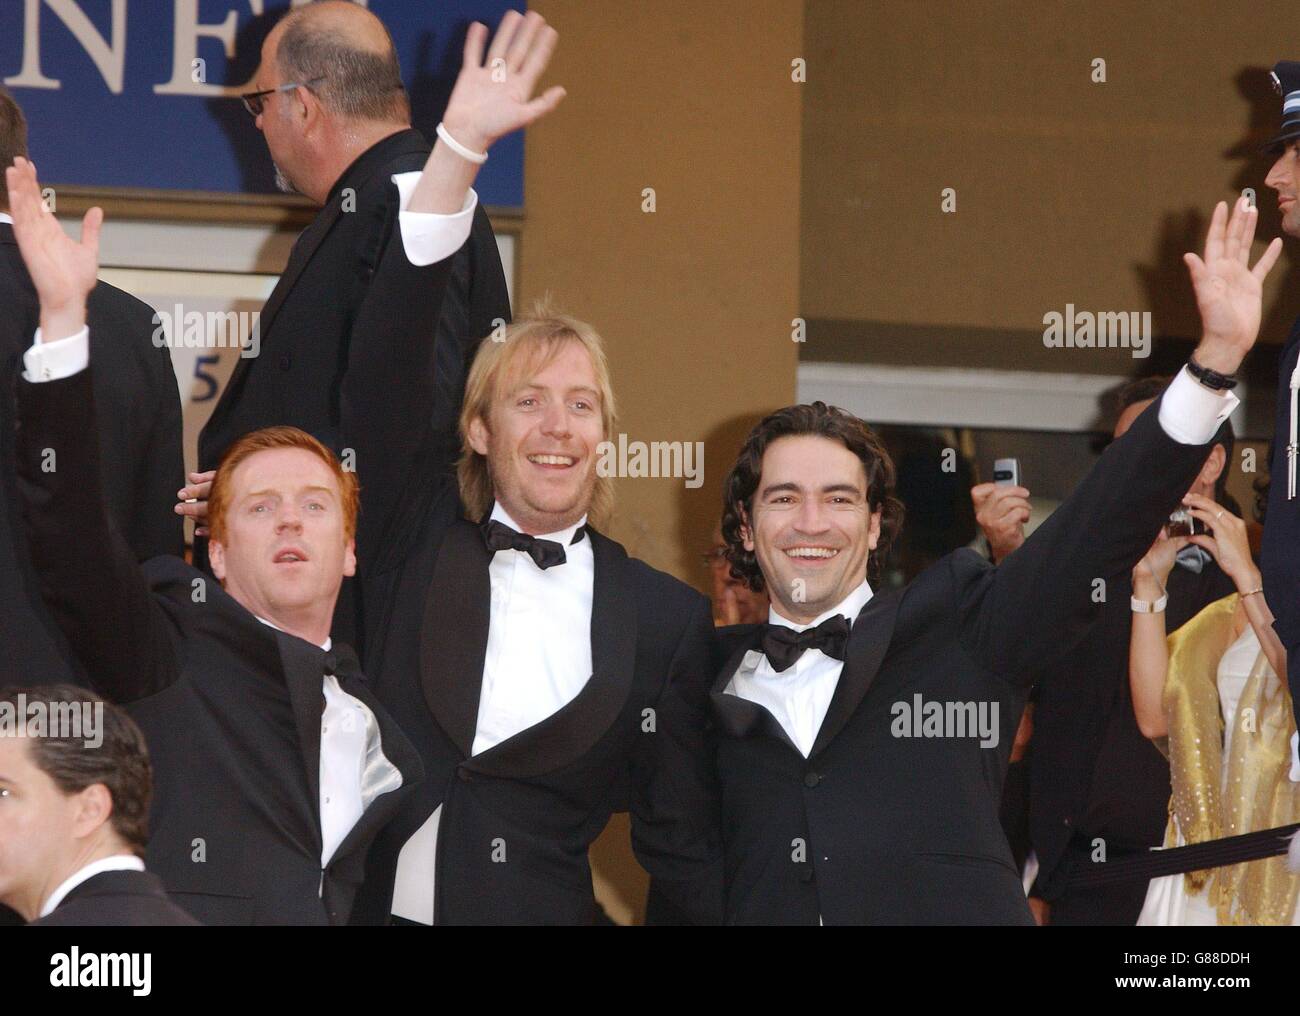 Festival del Cinema di Cannes 2005 - Premiere della Chromofobia - Palais des Festival. Damian Lewis (L), Rhys Ifans (C) e ben Chaplin. Foto Stock